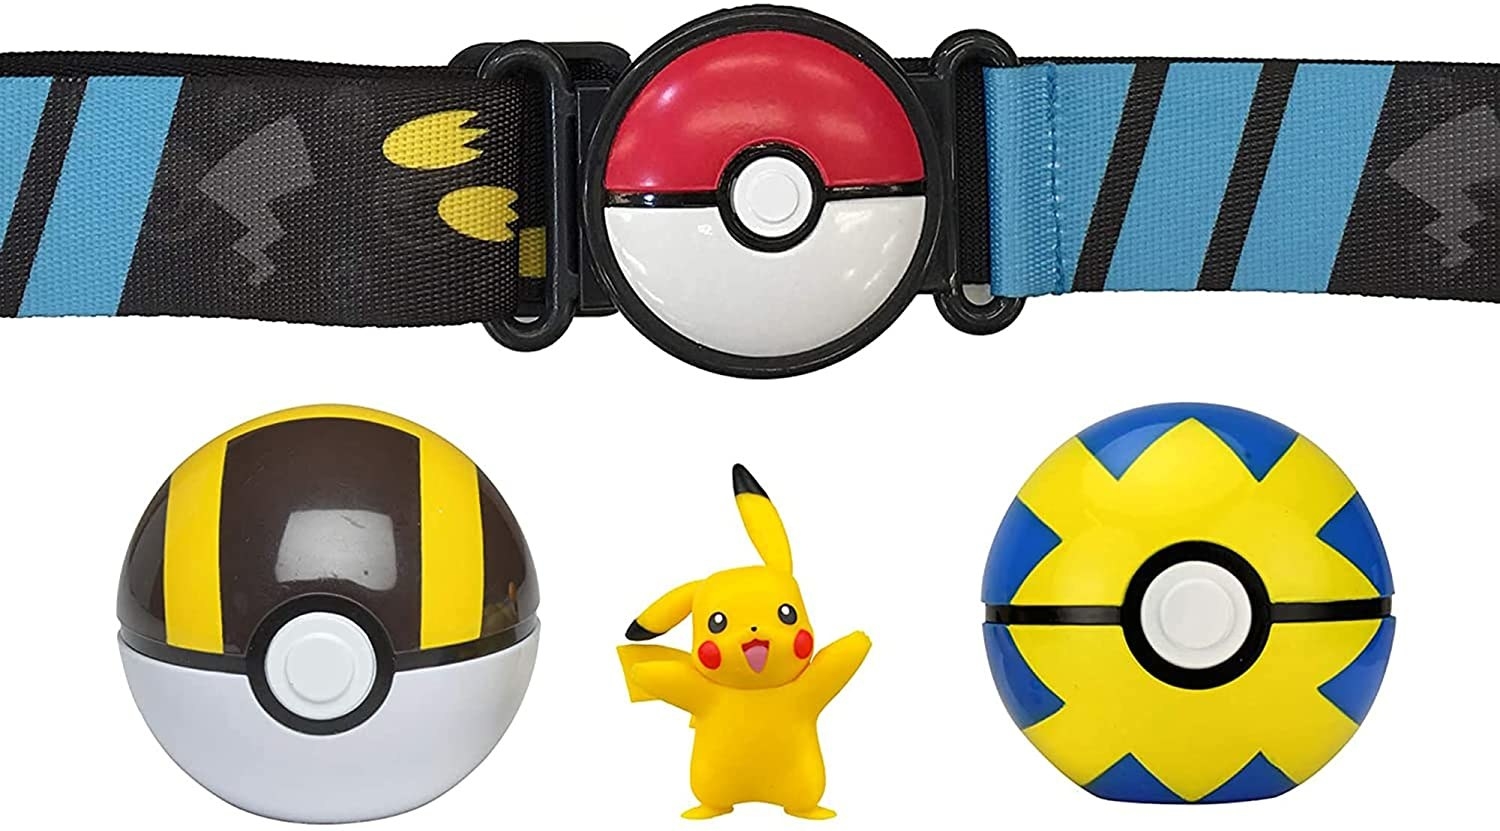 The Pokemon belt with poke balls and a Pikachu figurine